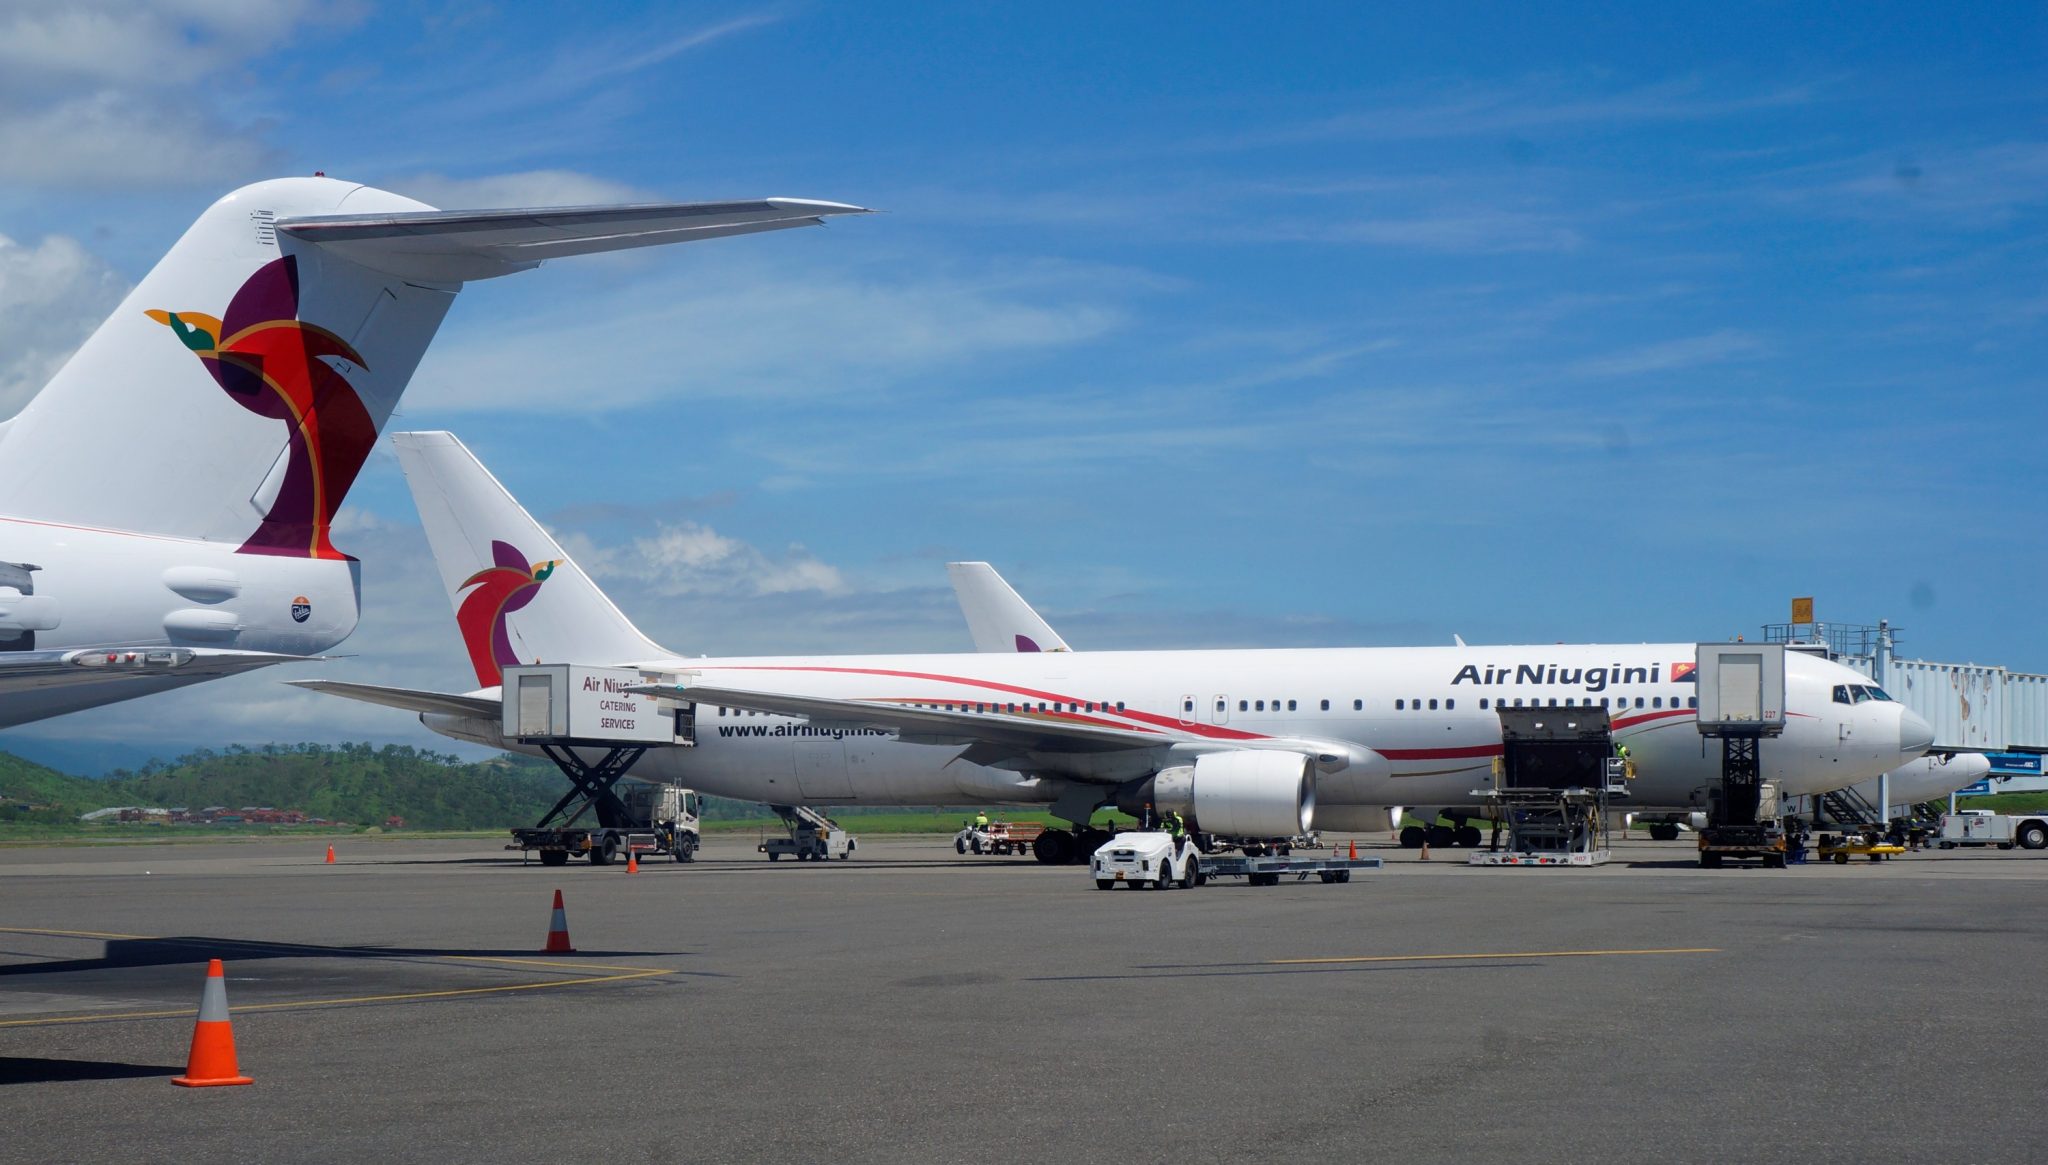 Temporary cancellation of Air Niugini services to Denpasar, Bali